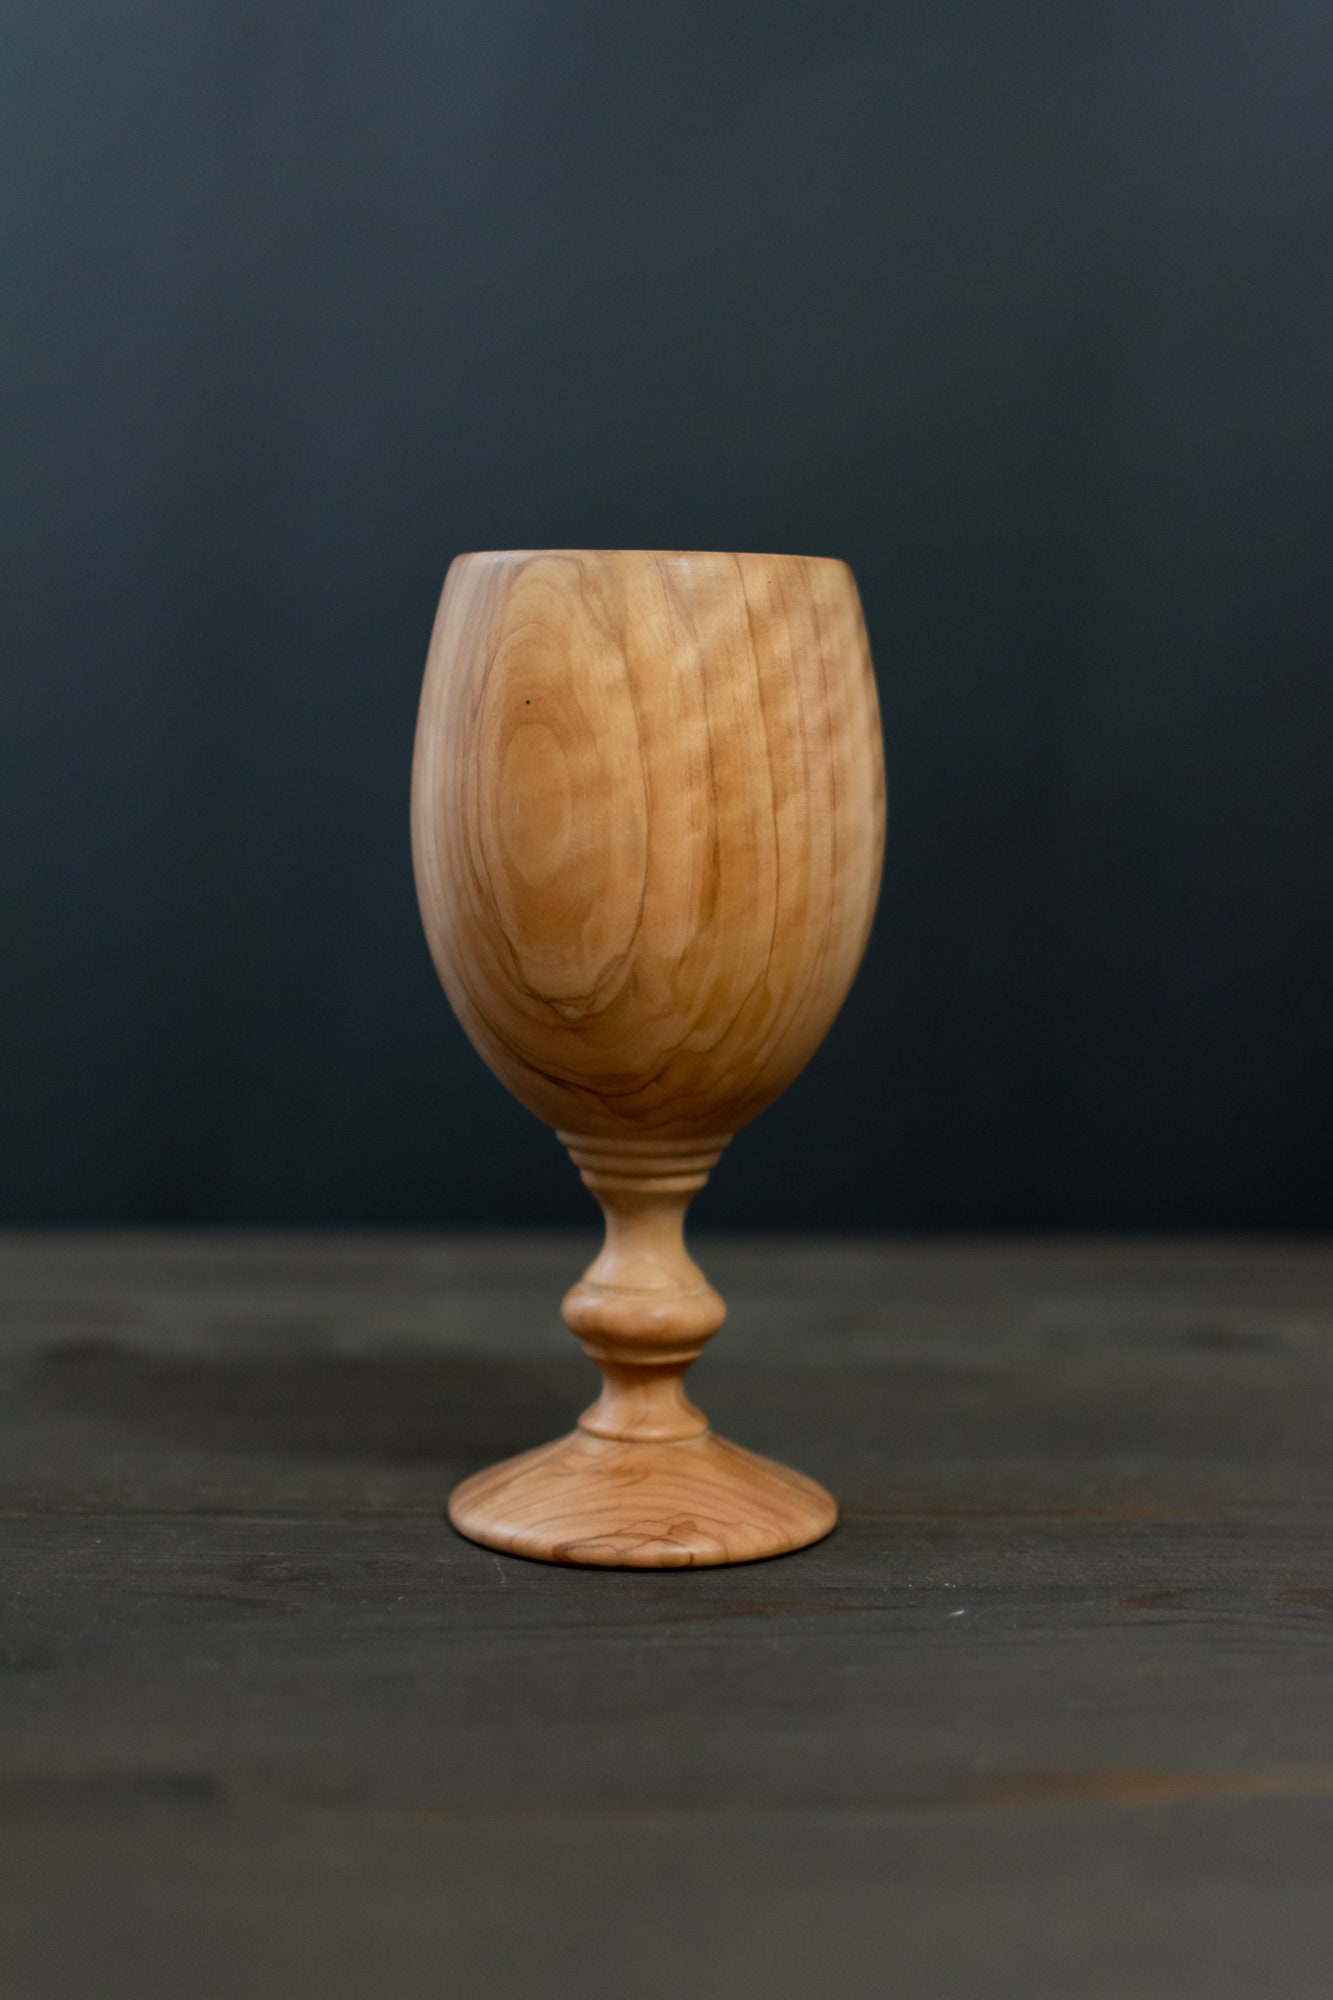 Wooden Wine Glasses